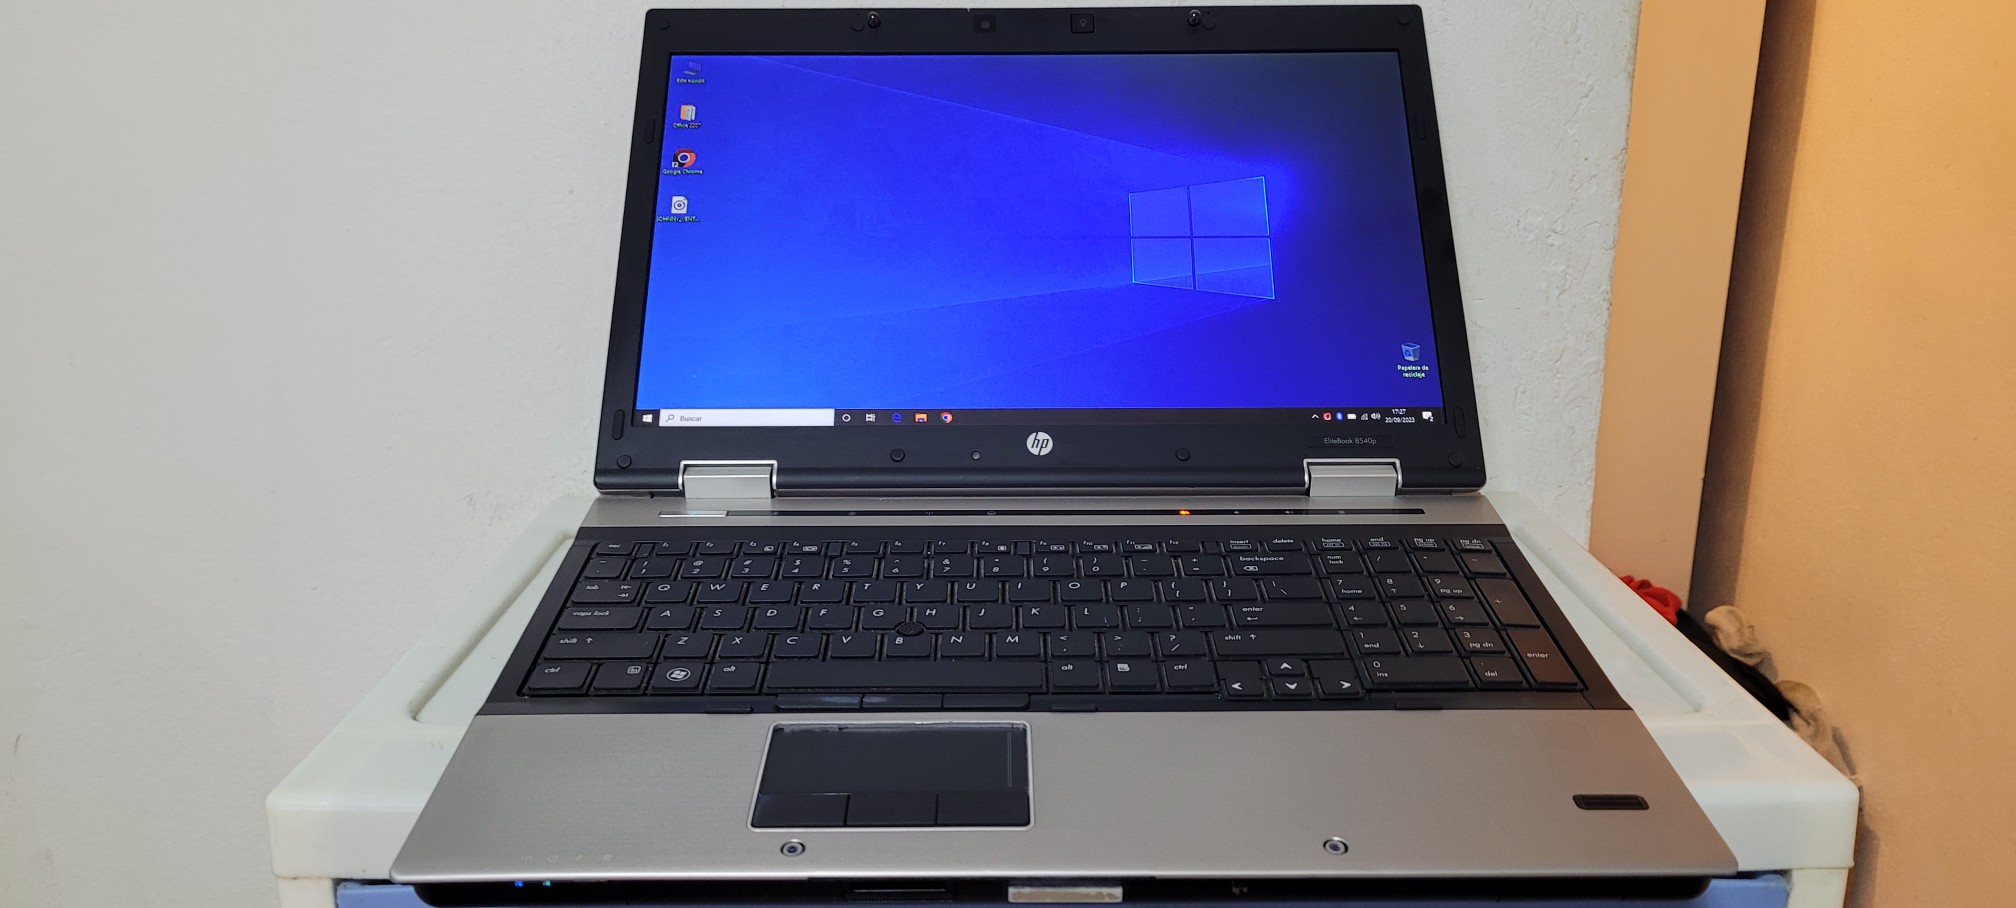 computadoras y laptops - Laptop hp 17 Pulg Core i7 Ram 8gb SSD 128GB Nvidea 1gb Dedicada